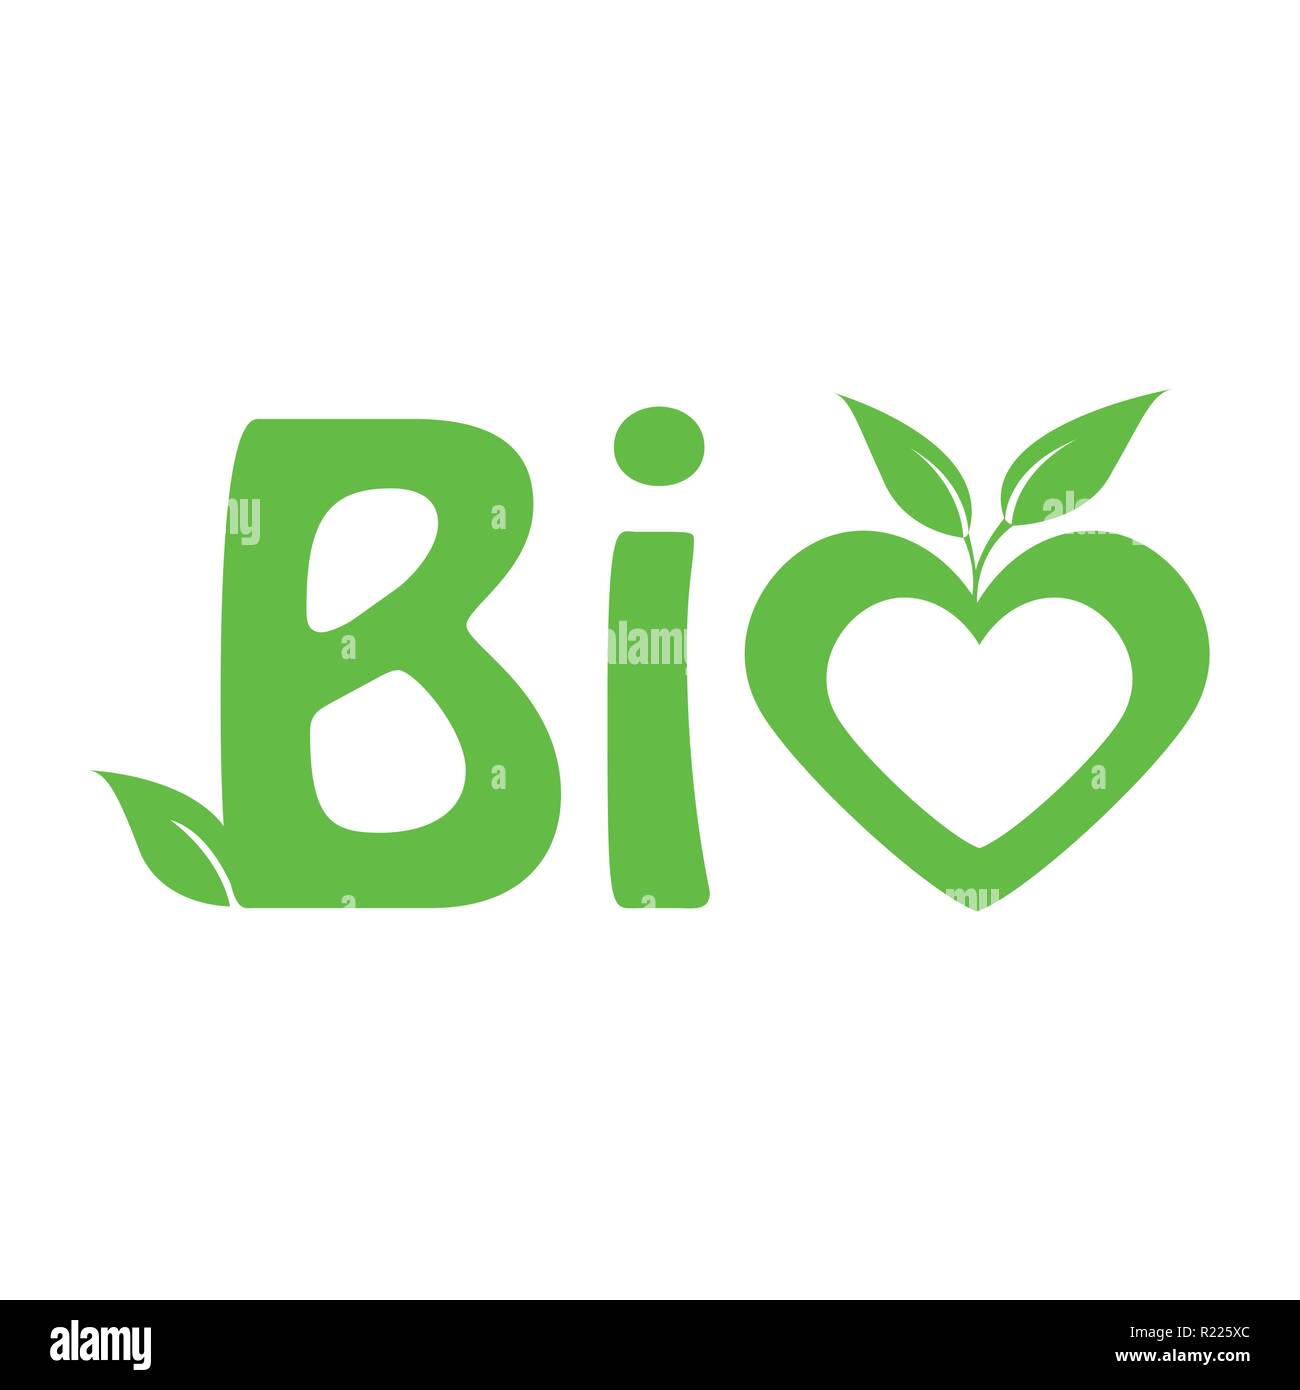 Grün bio Symbol für gesundes Essen Vektor-illustration EPS 10. Stock Vektor